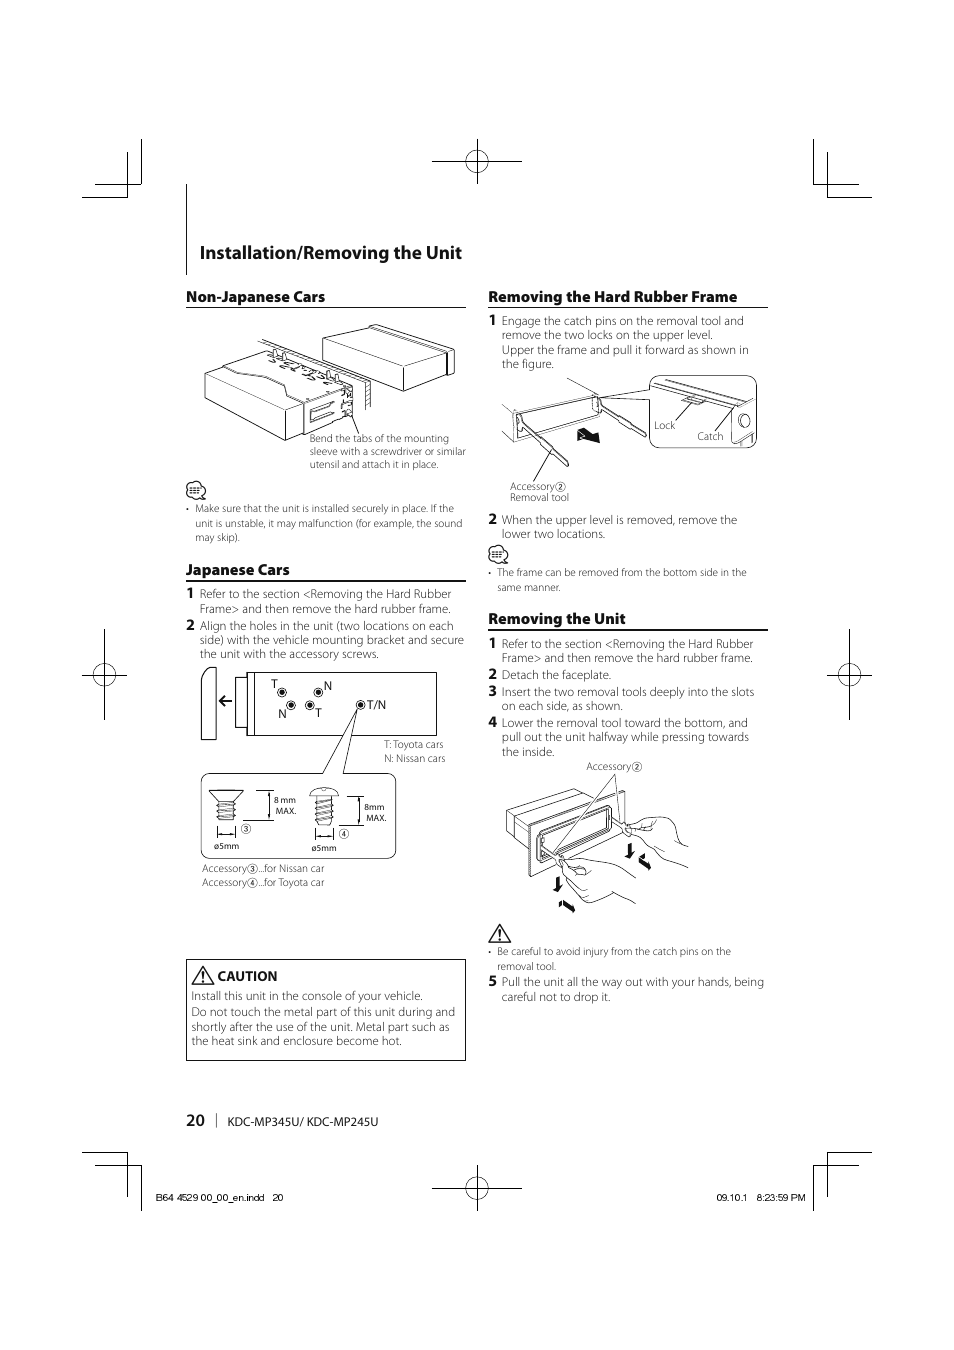 Installation/removing the unit | Kenwood KDC-MP345U User Manual | Page 20 /  68 | Original mode